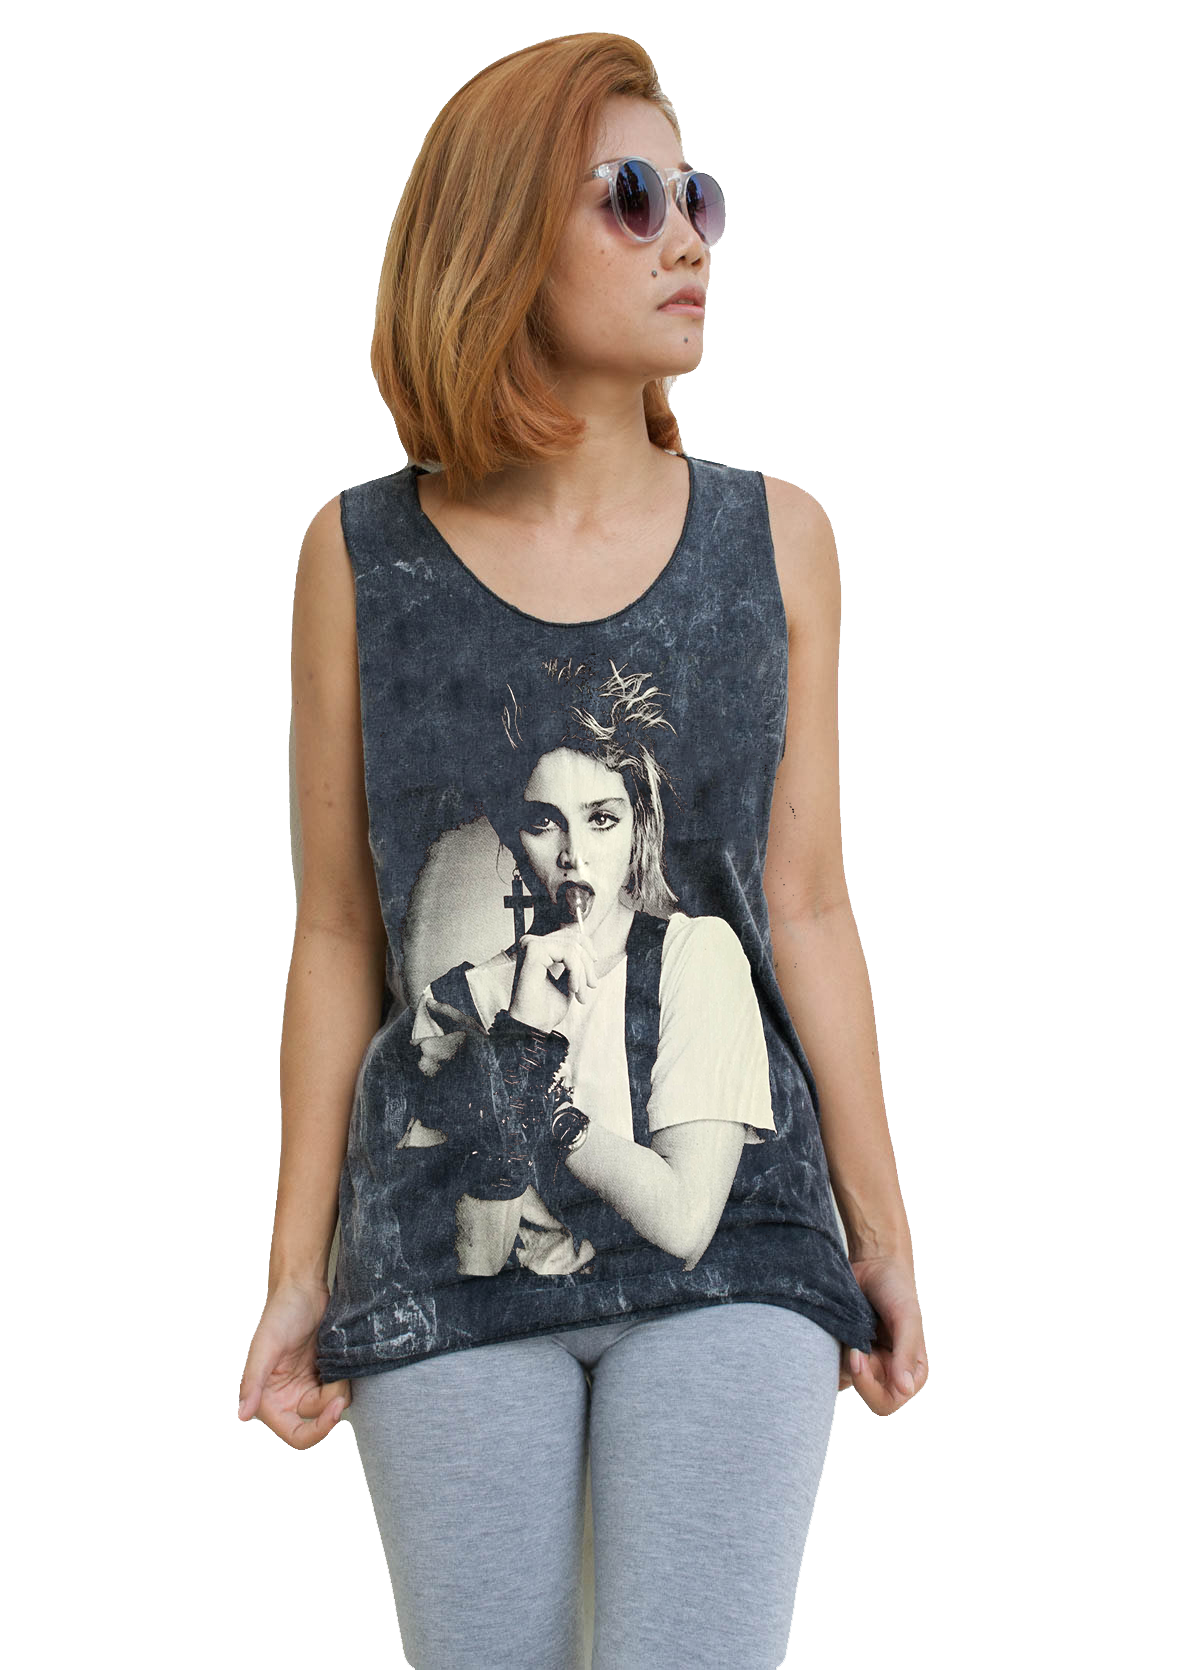 Unisex Madonna Tank-Top Singlet vest Sleeveless T-shirt